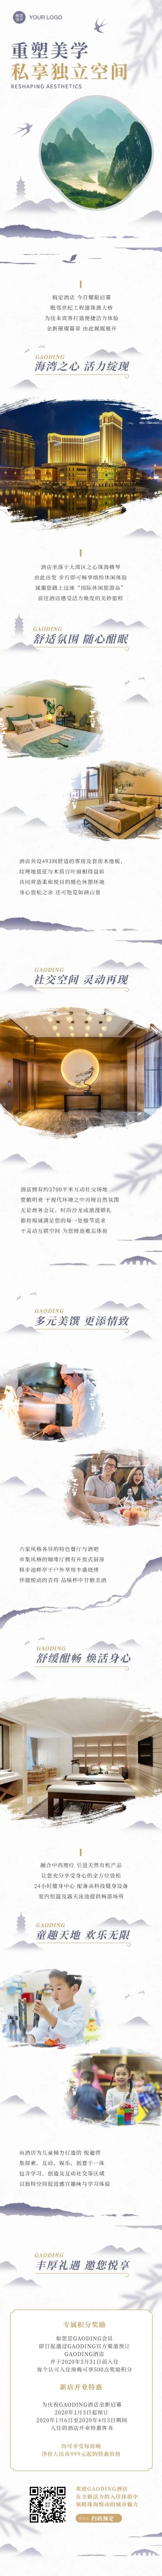 H5长页水墨中国风介绍宣传活动山峰